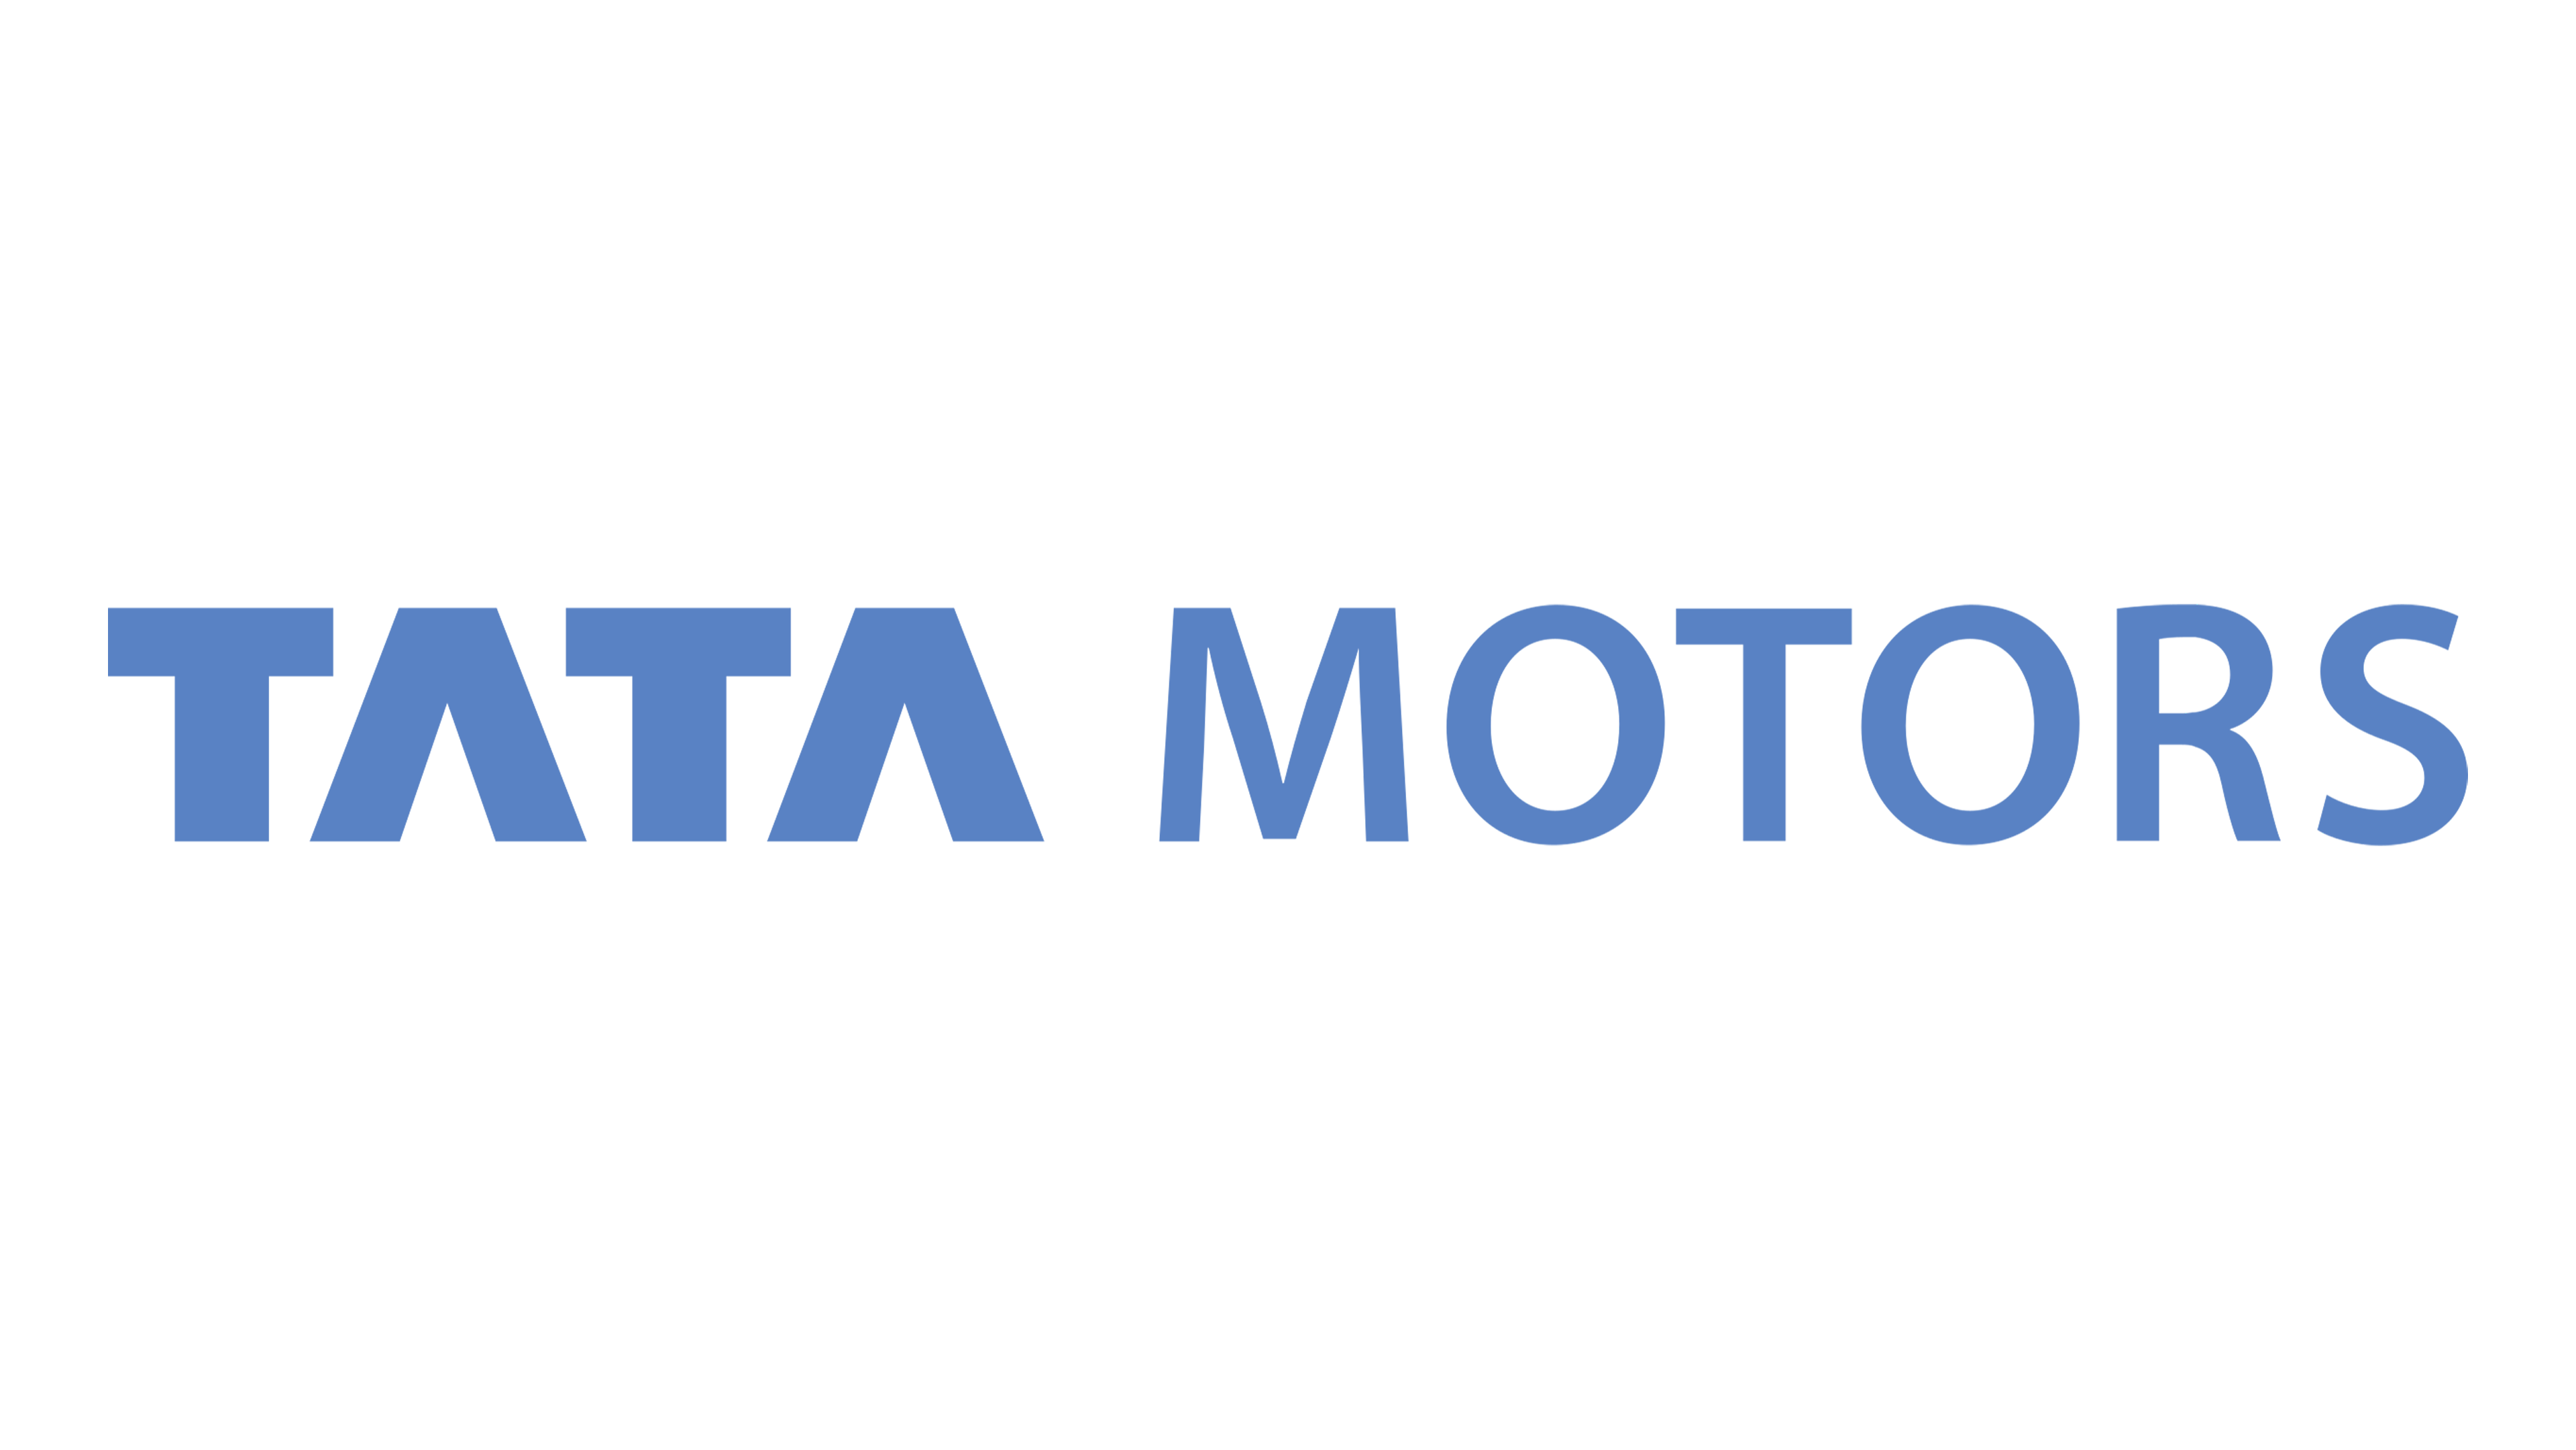 Tata Motors emblem stickers in custom colors and sizes